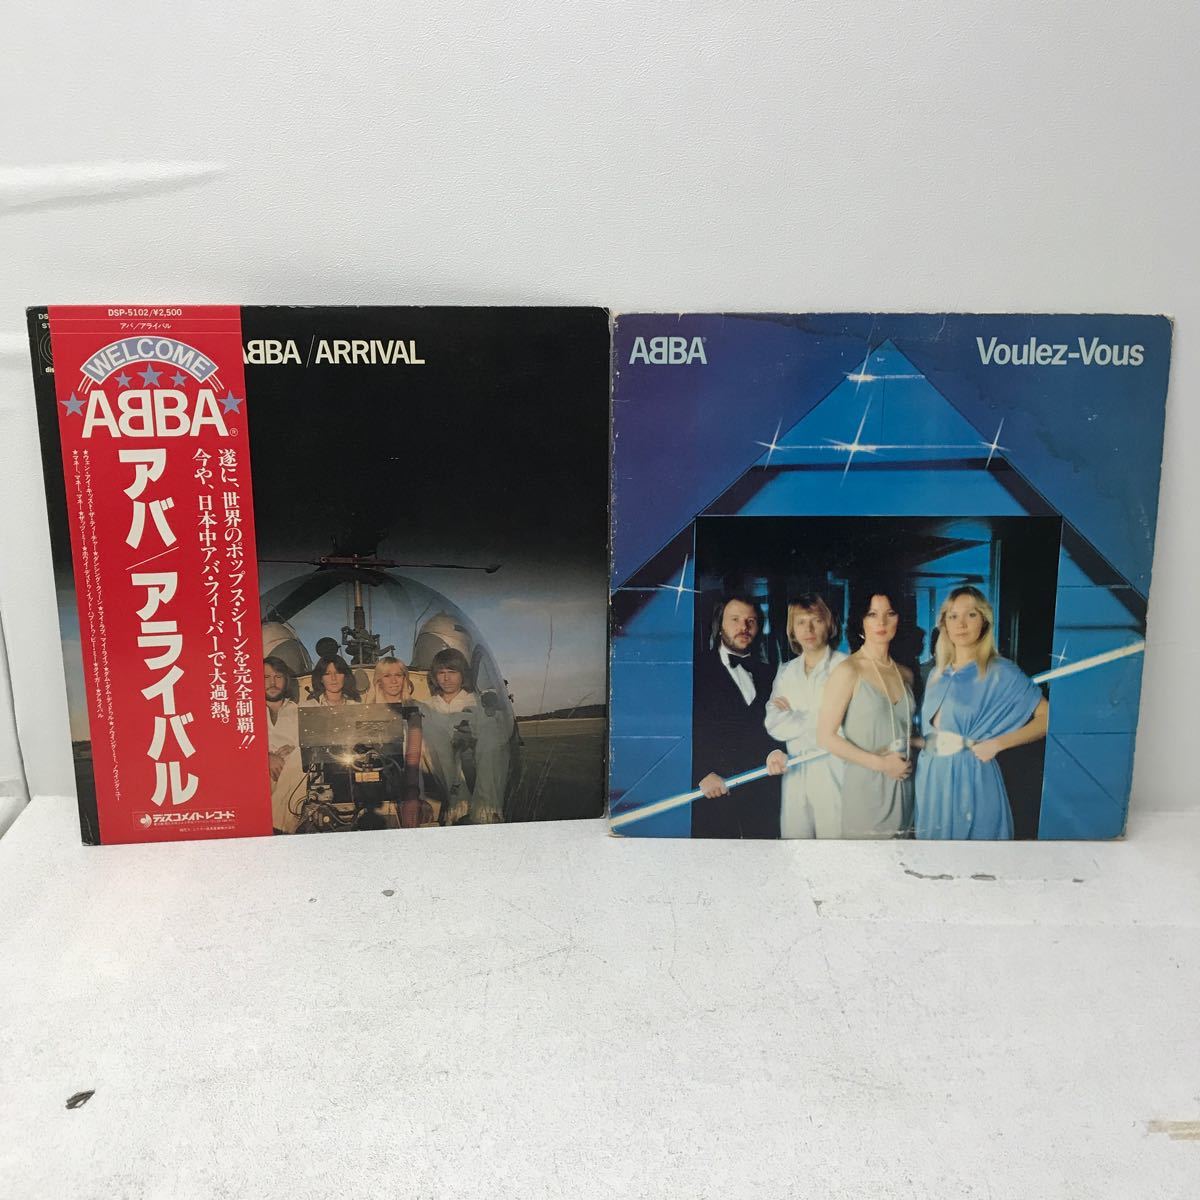 I1107A3 アバ ABBA LP レコード 6巻セット 音楽 洋楽 / アライバル 